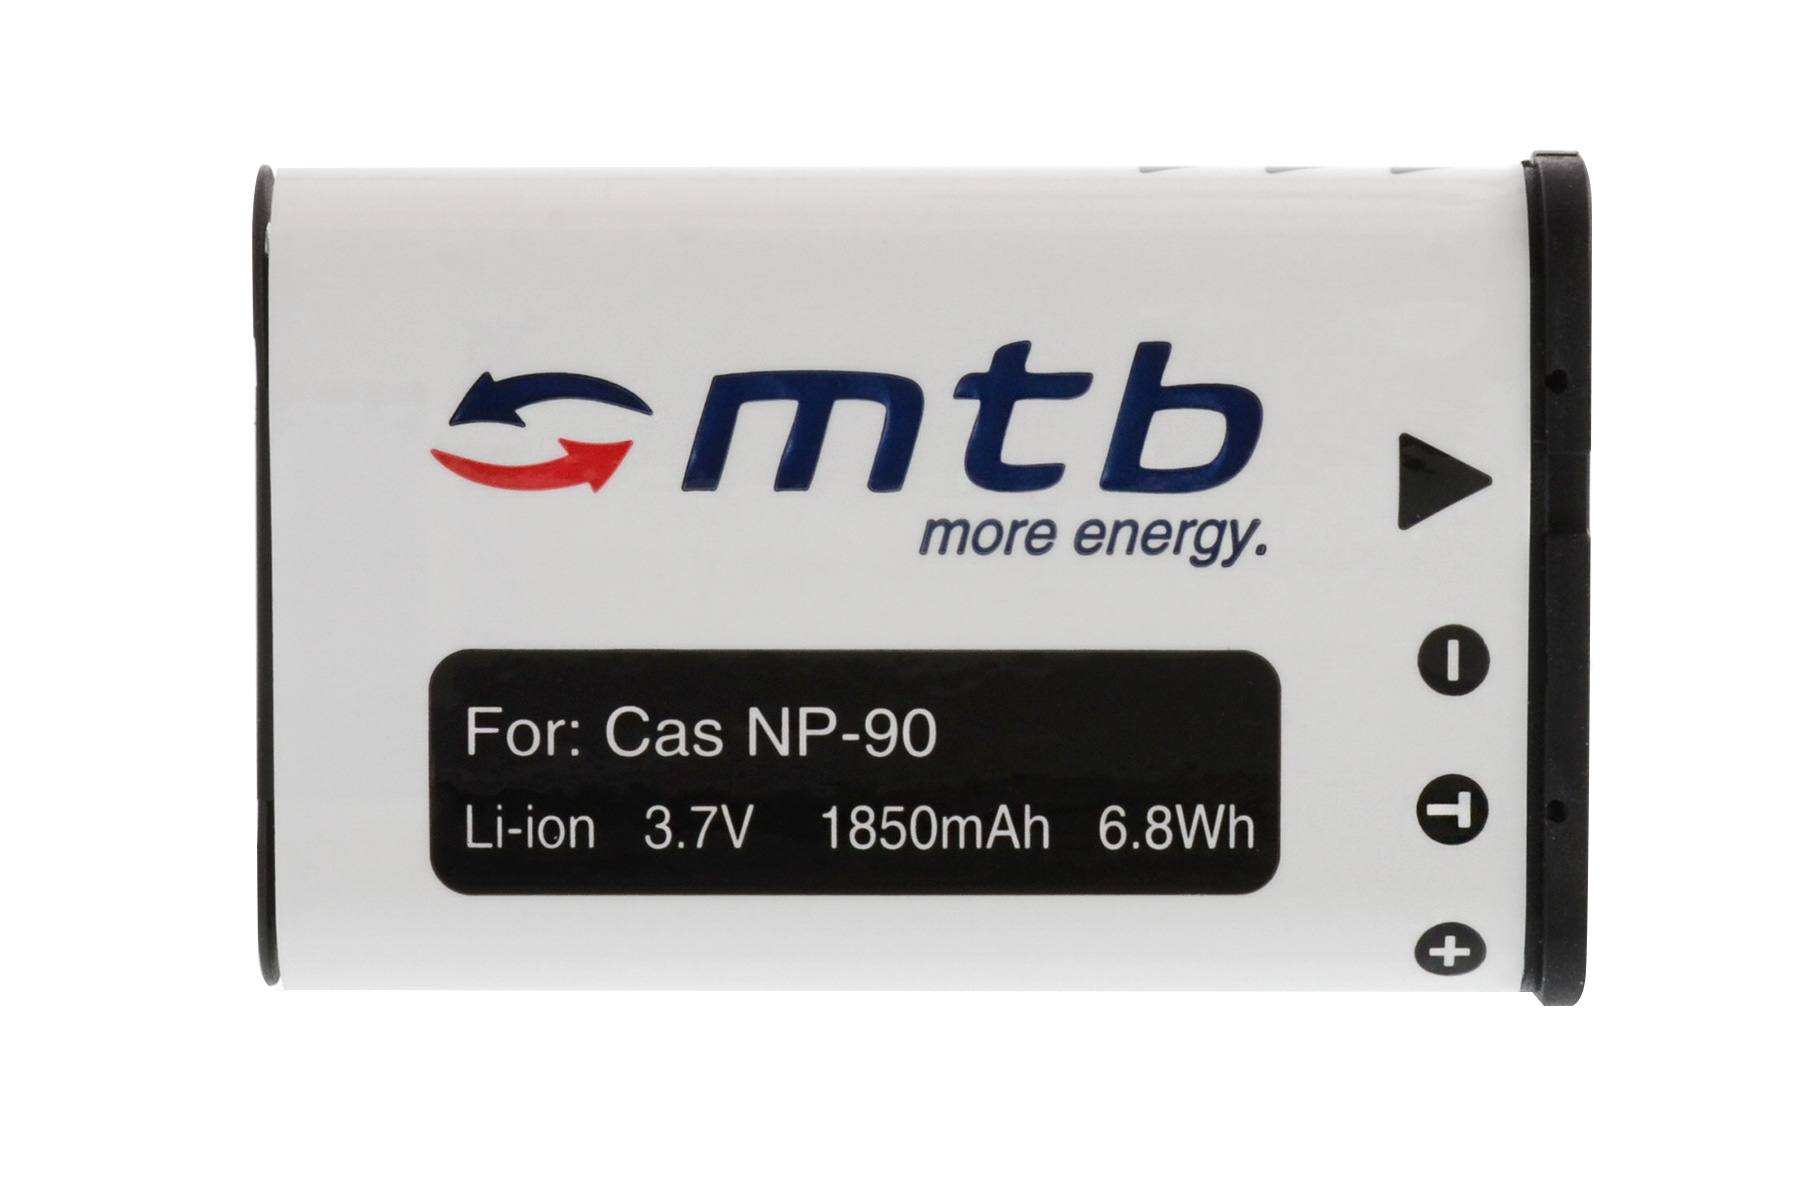 NP-90 ENERGY MTB MORE Li-Ion, 1850 mAh Akku, BAT-232 2x